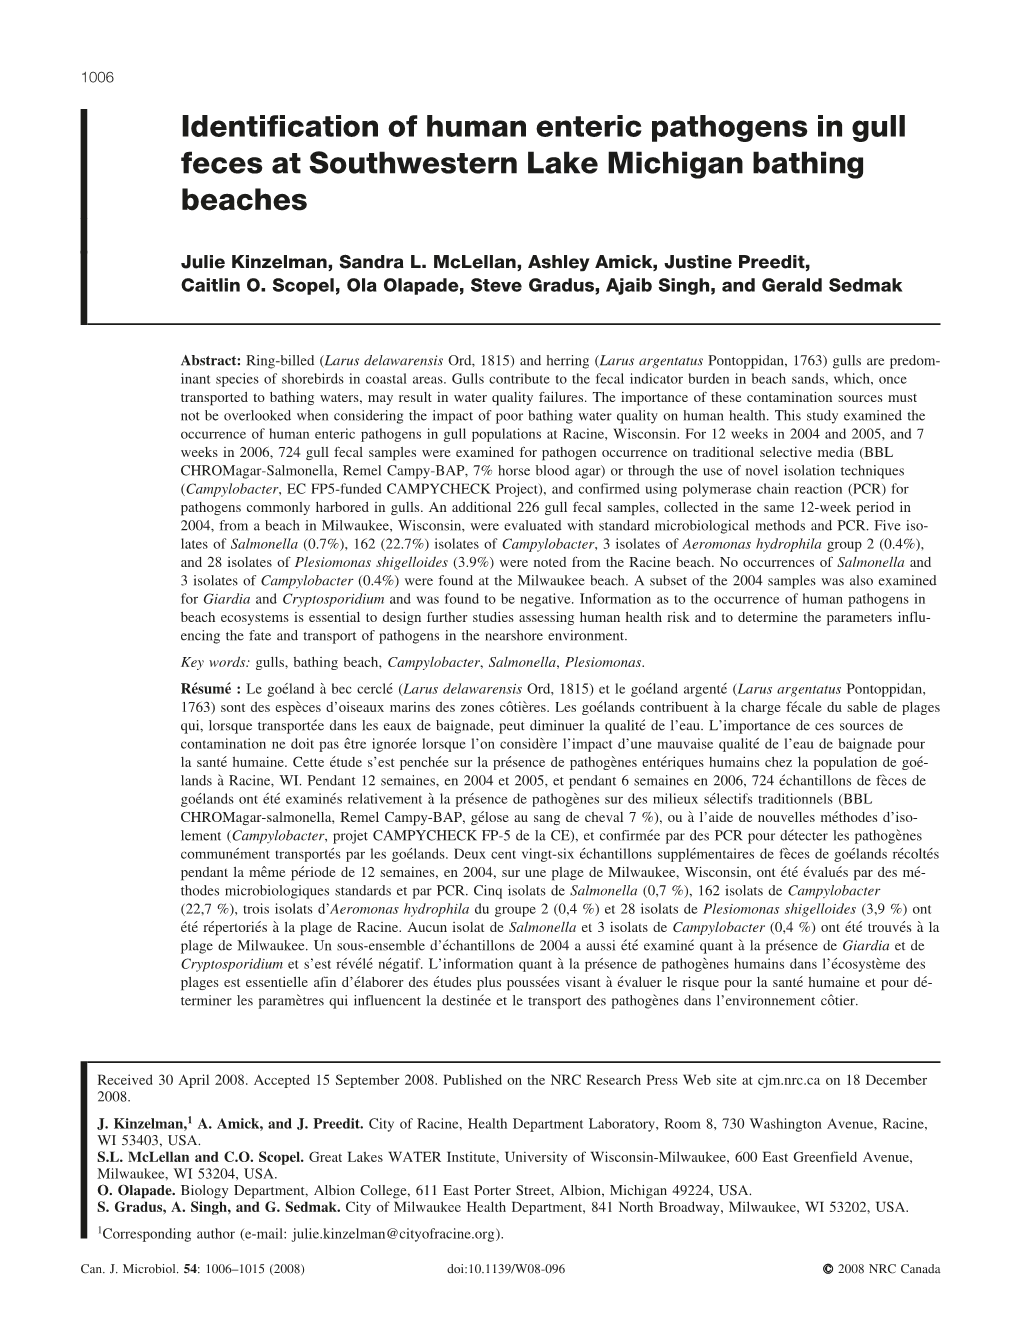 Identification of Human Enteric Pathogens in Gull Feces at Southwestern Lake Michigan Bathing Beaches